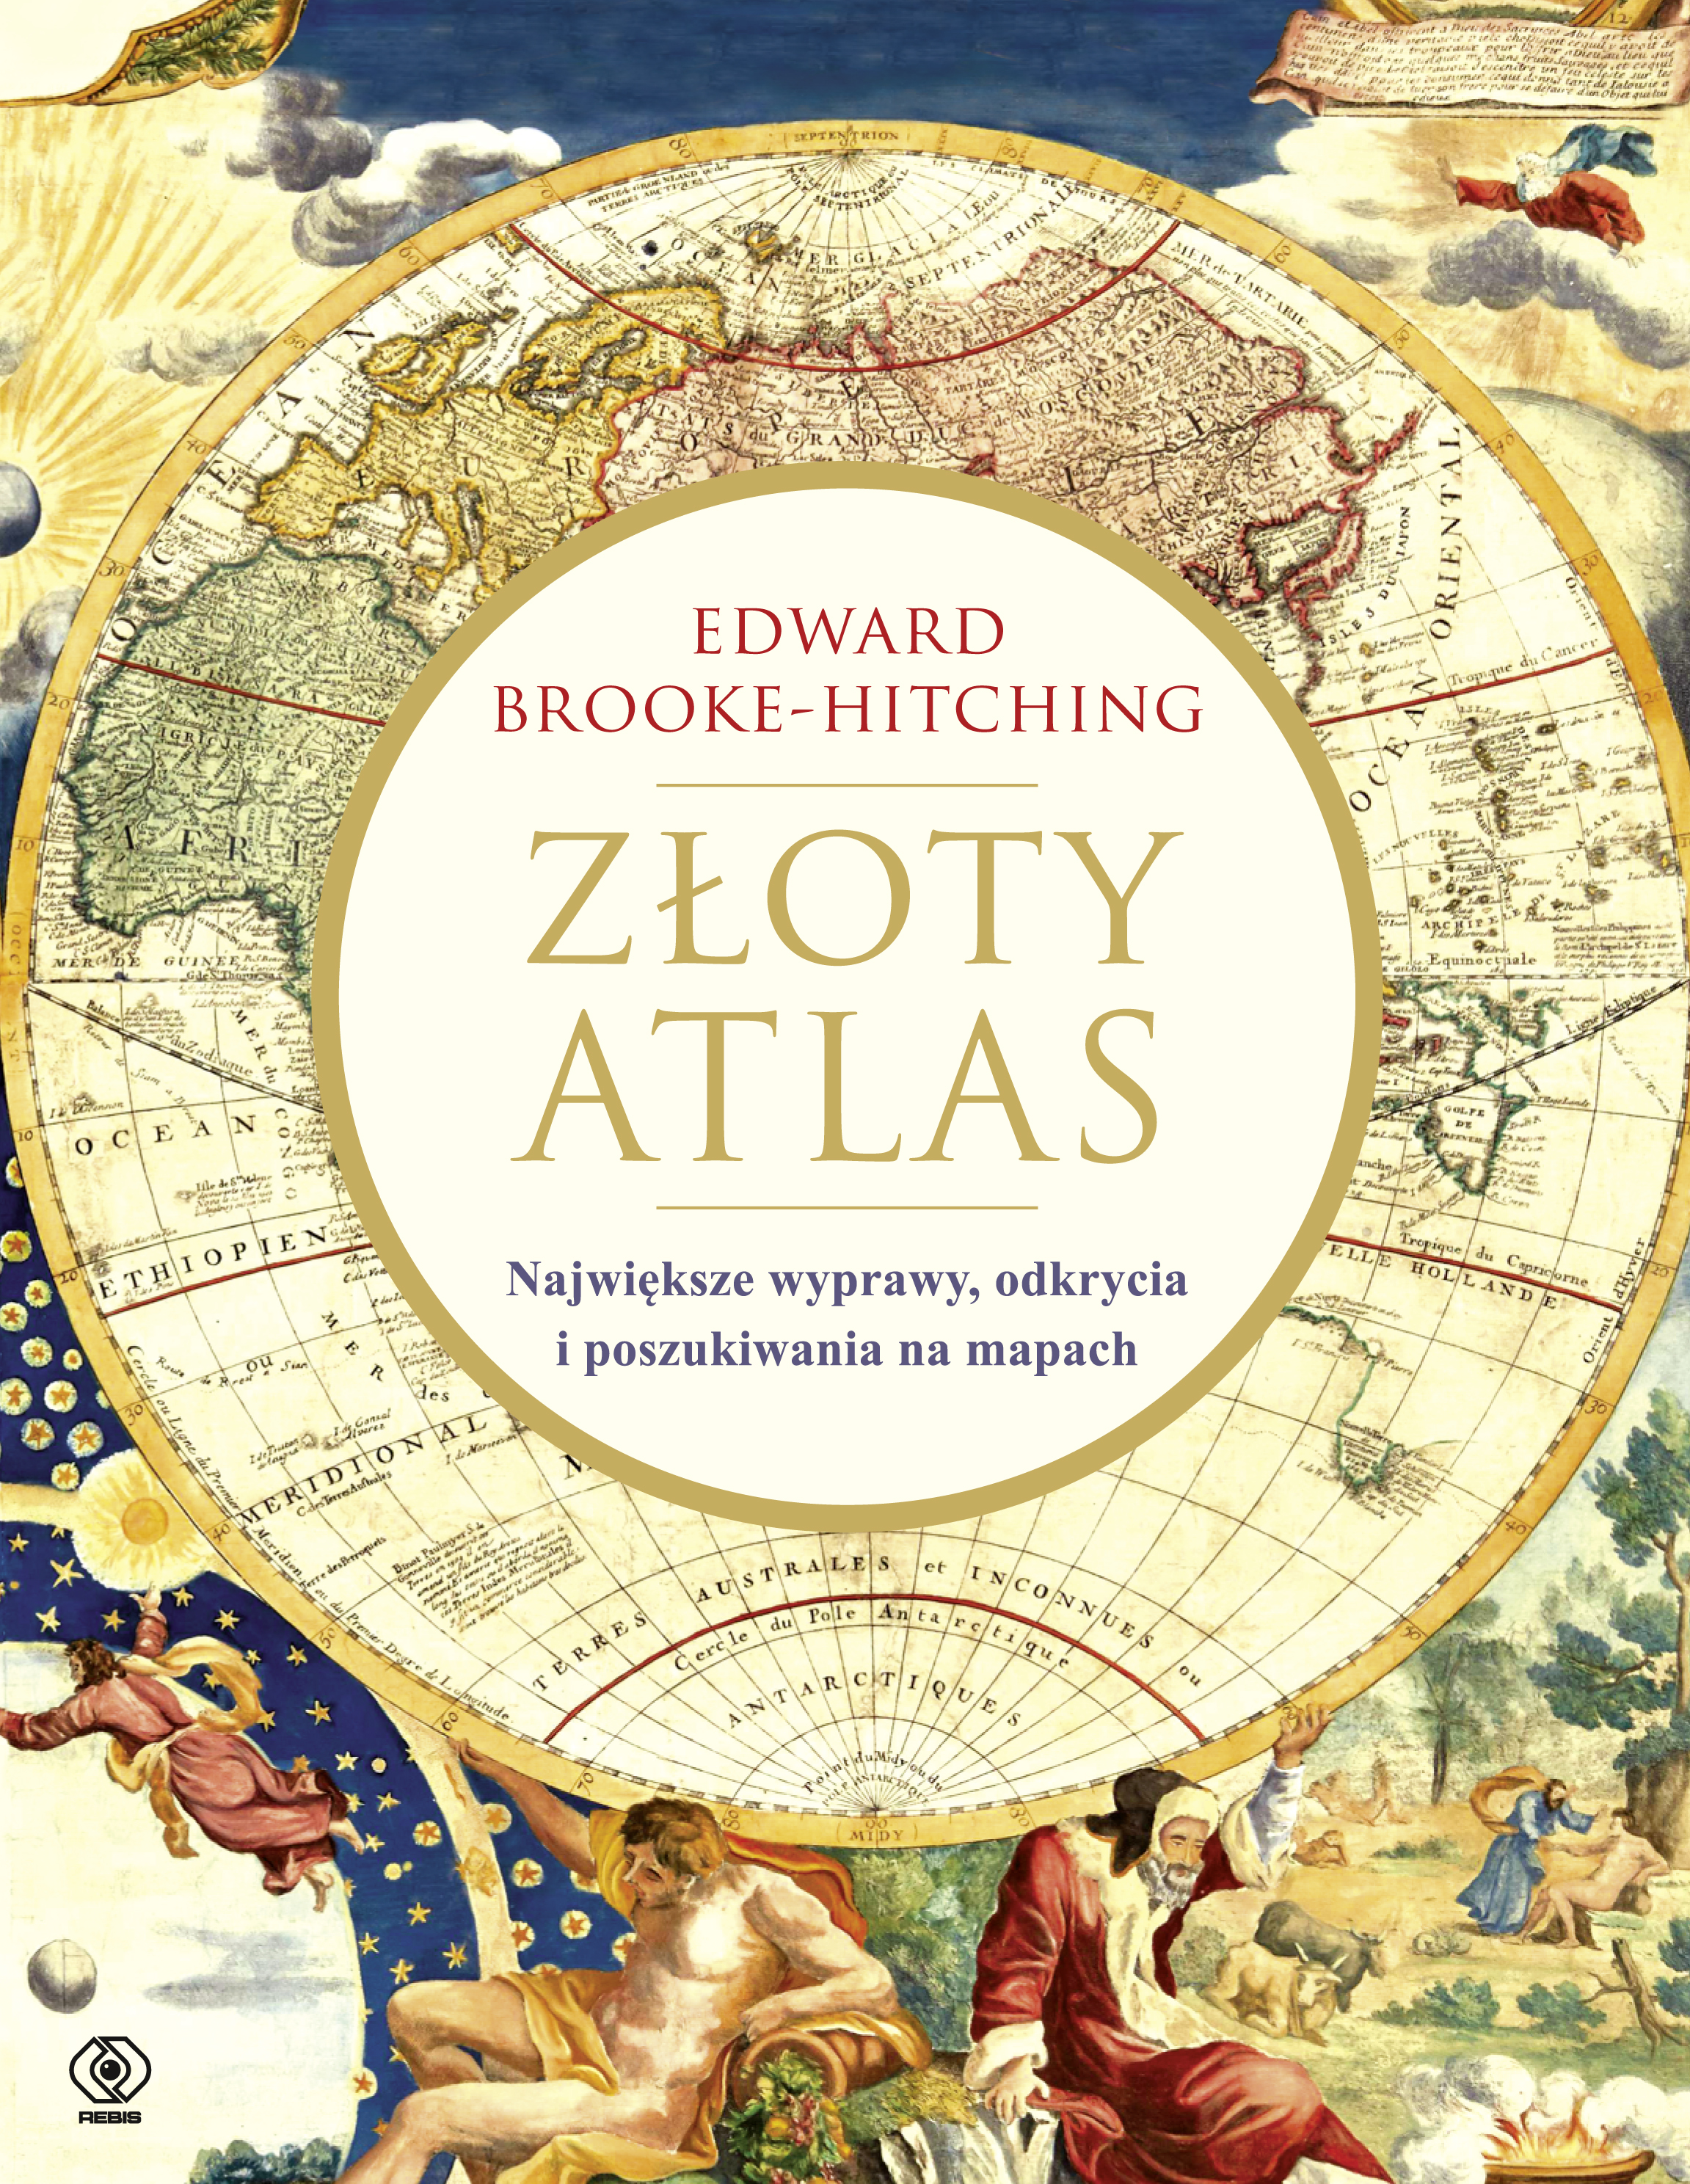 "Złoty atlas", Edward Brooke-Hitching